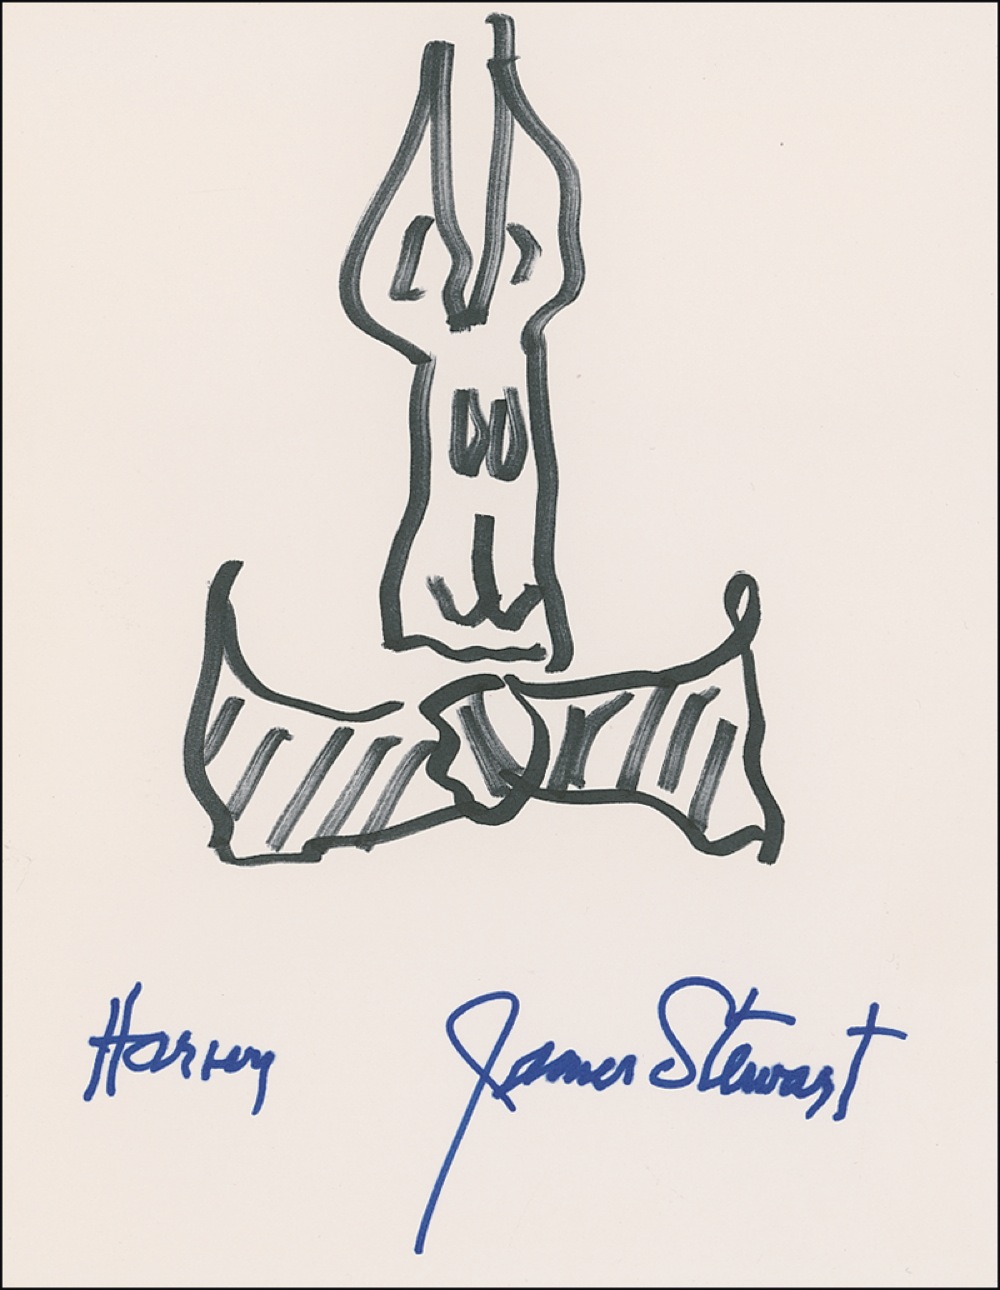 Lot #904 James Stewart